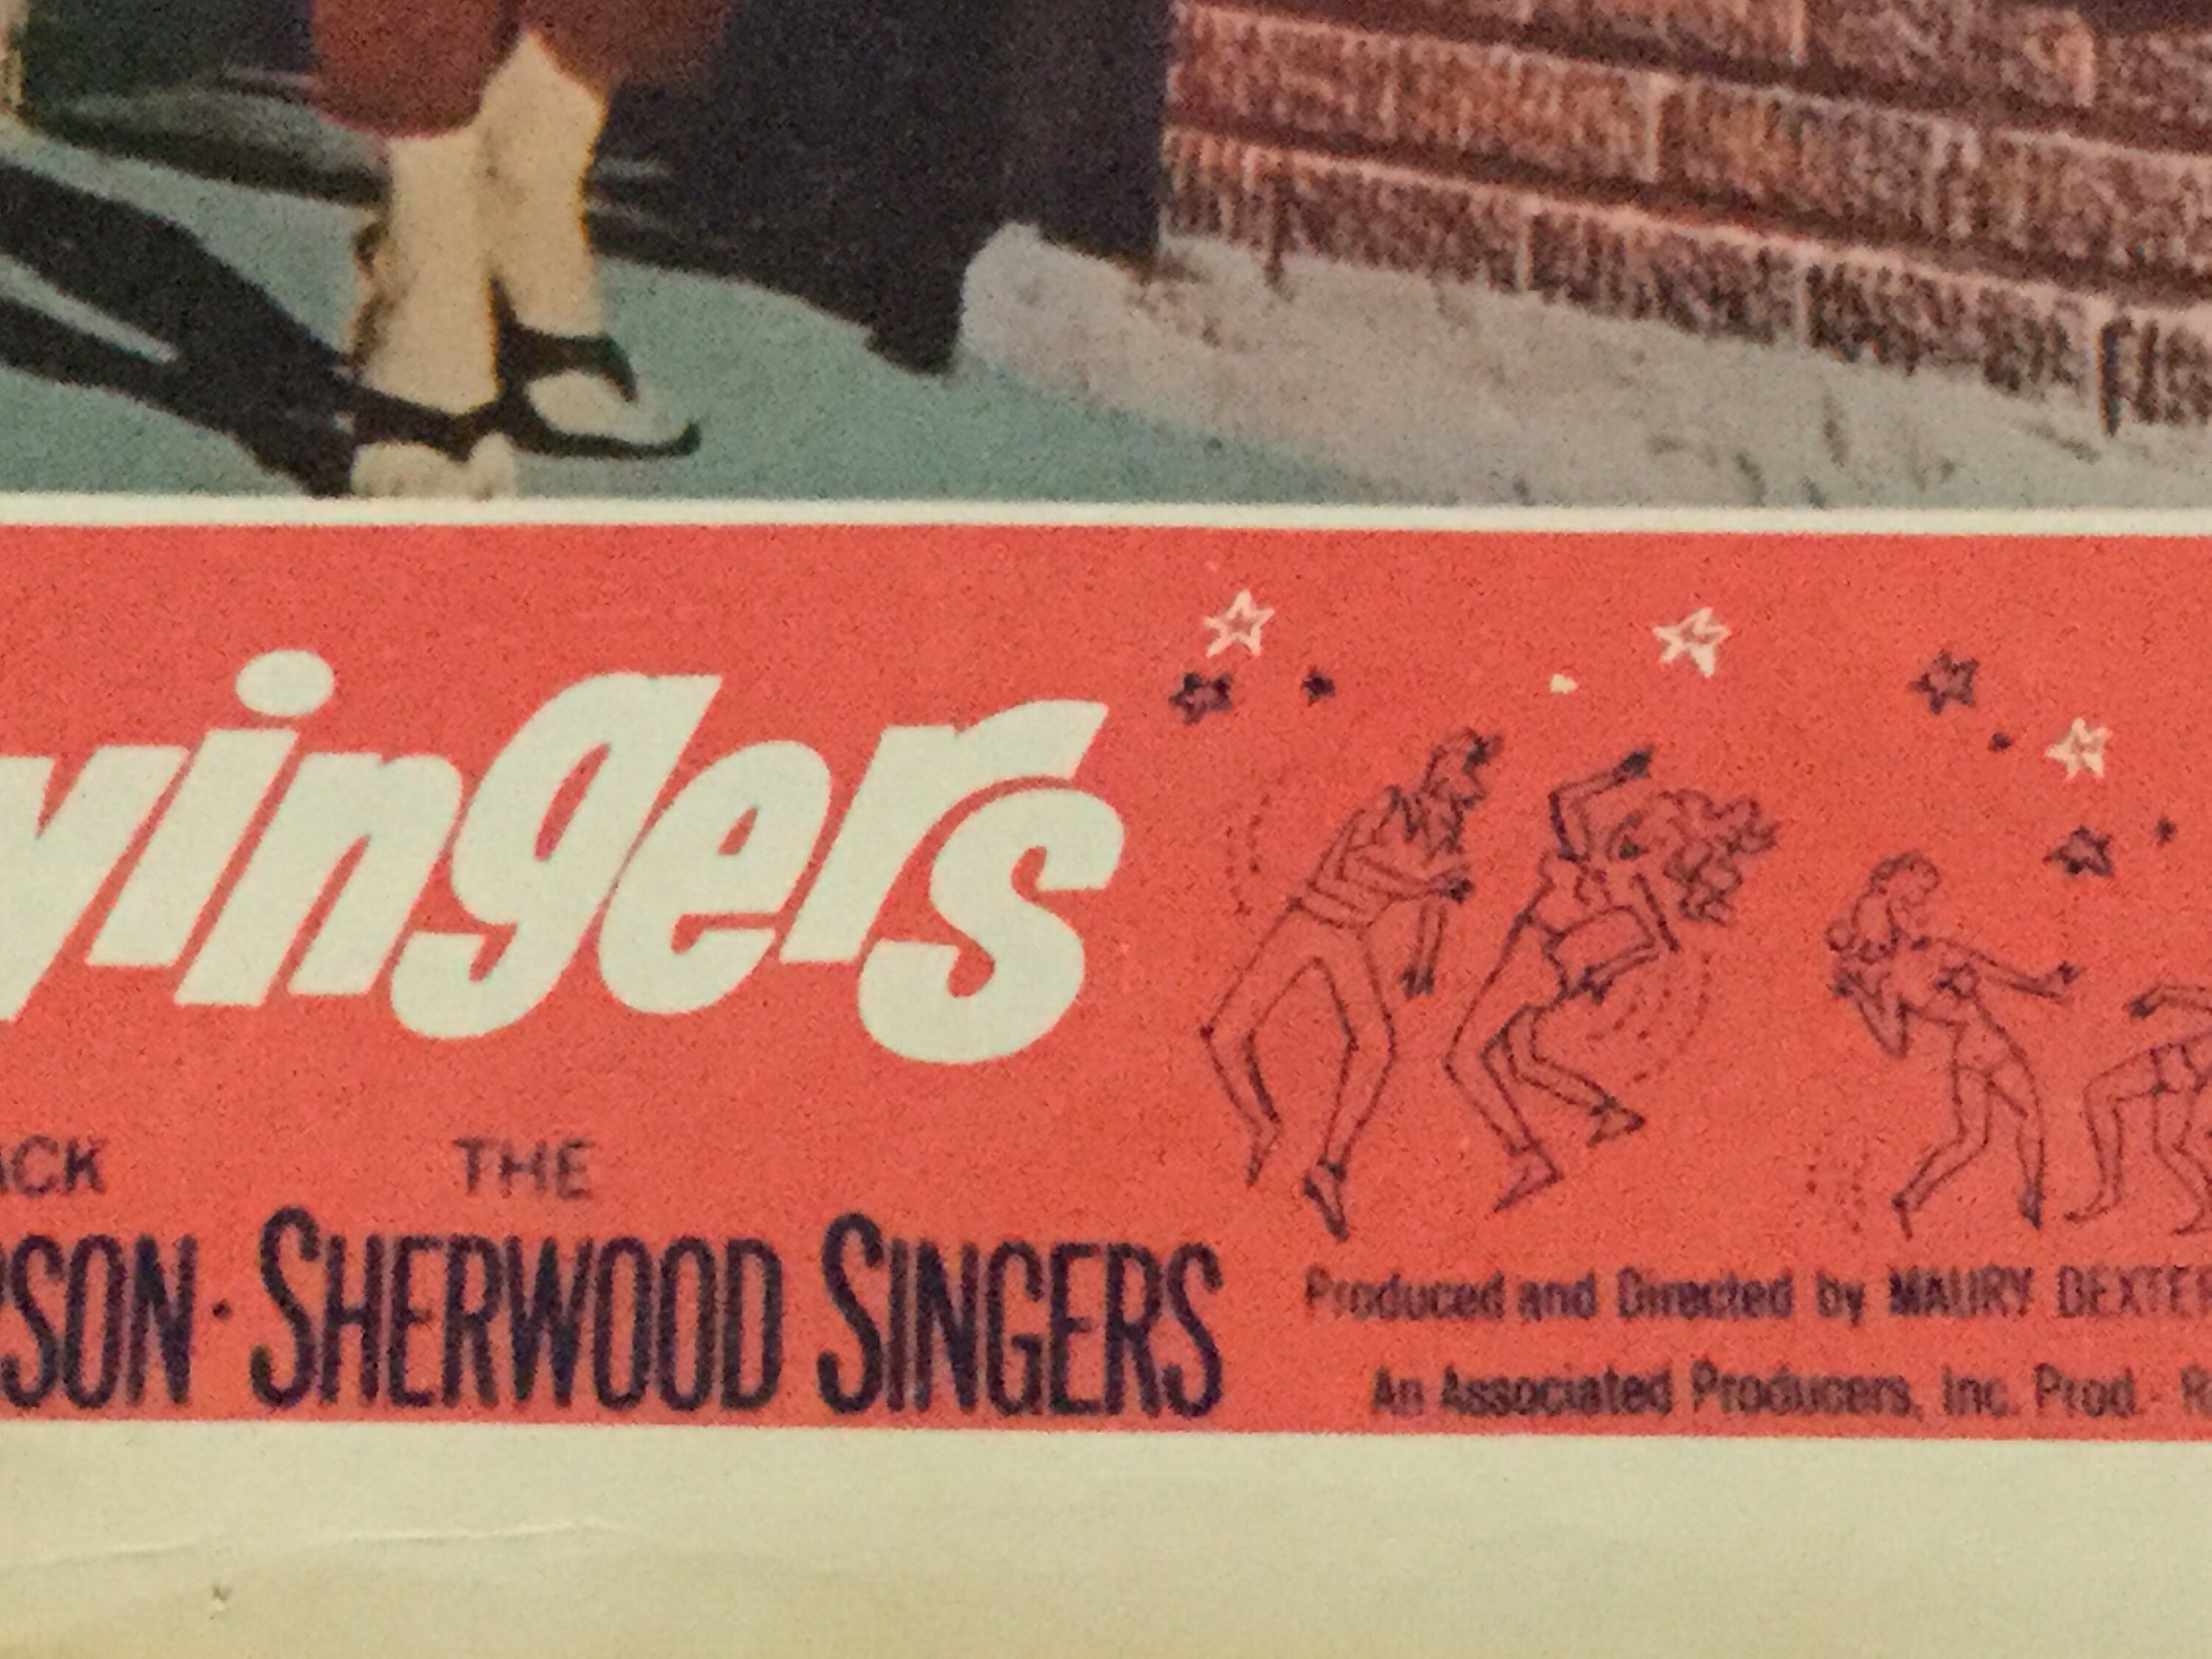 sherwood singers the young swingers Fucking Pics Hq